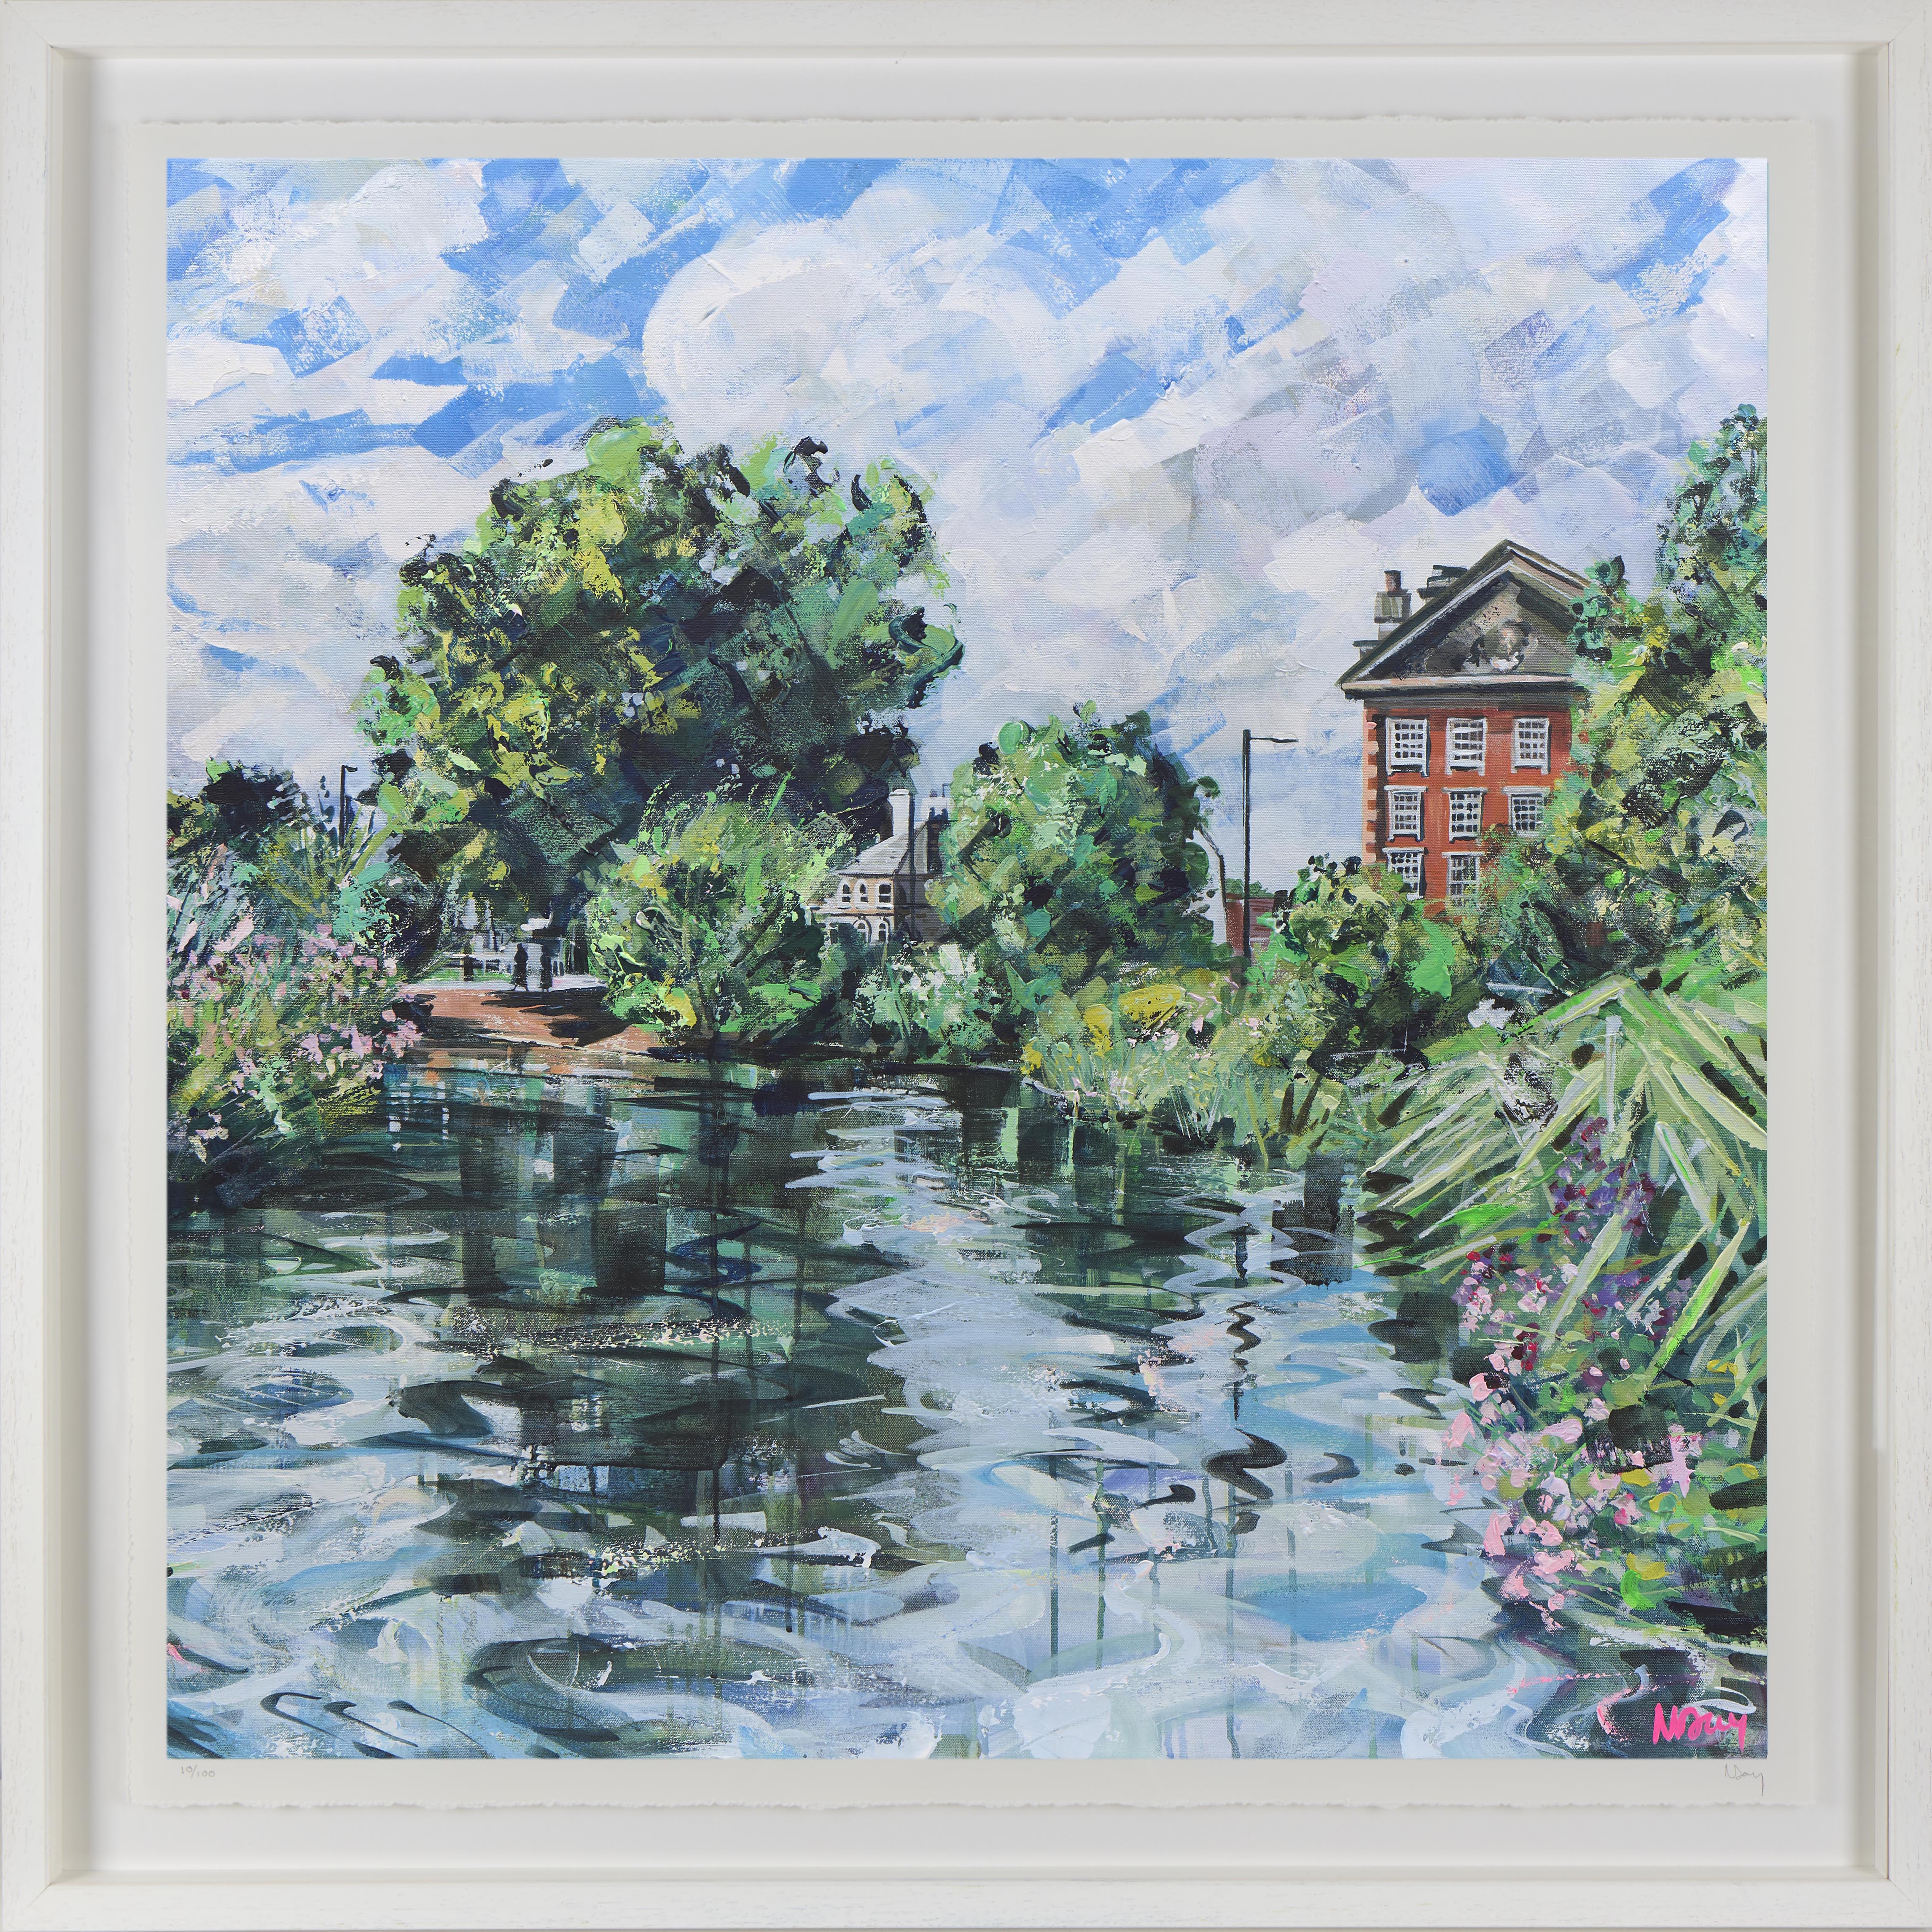 Print of Barnes Pond 80x80cm framed by Nadia Day at Riverside Gallery Barnes